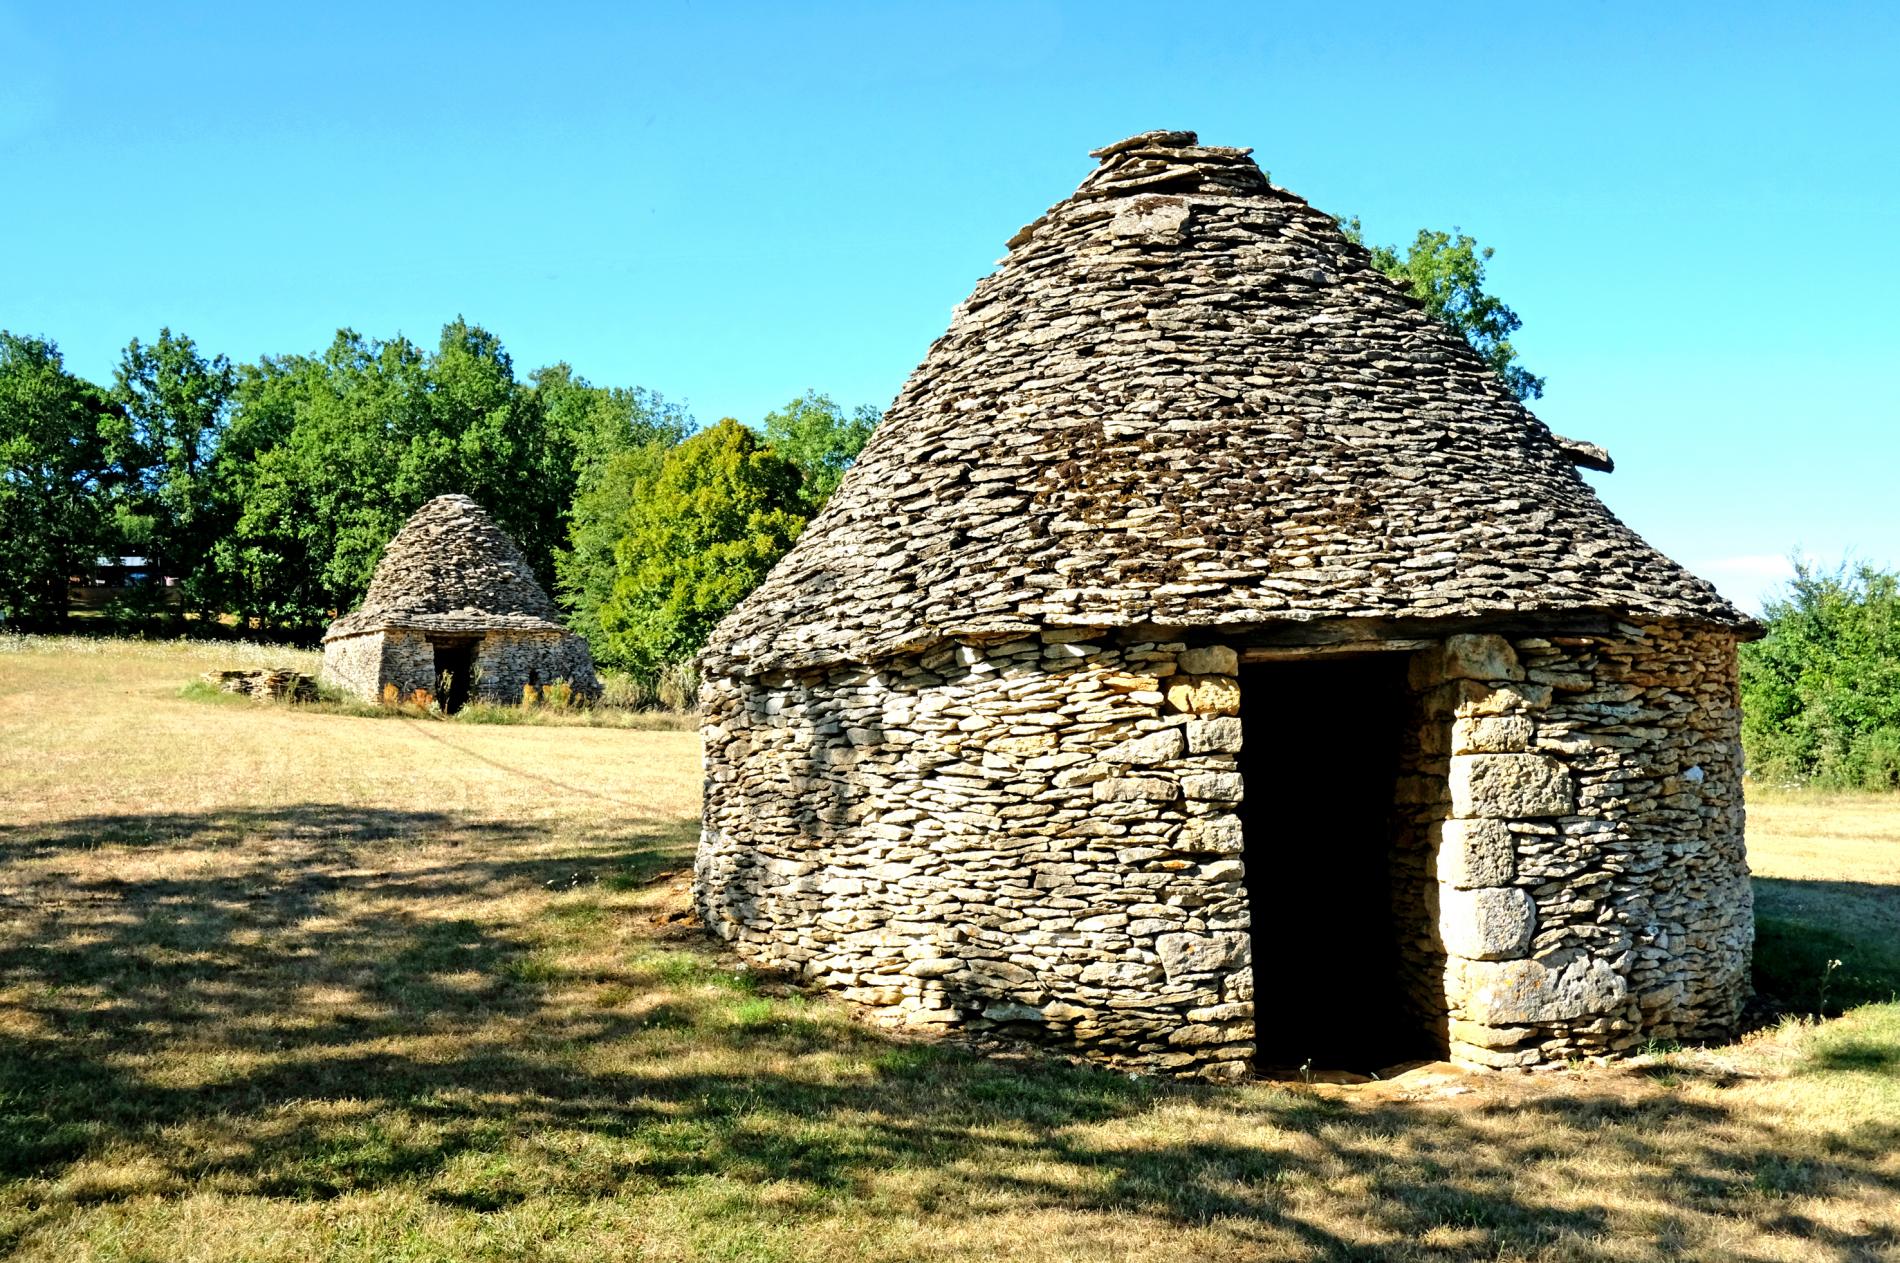 Les cabanes en pierres sèches du Périgord